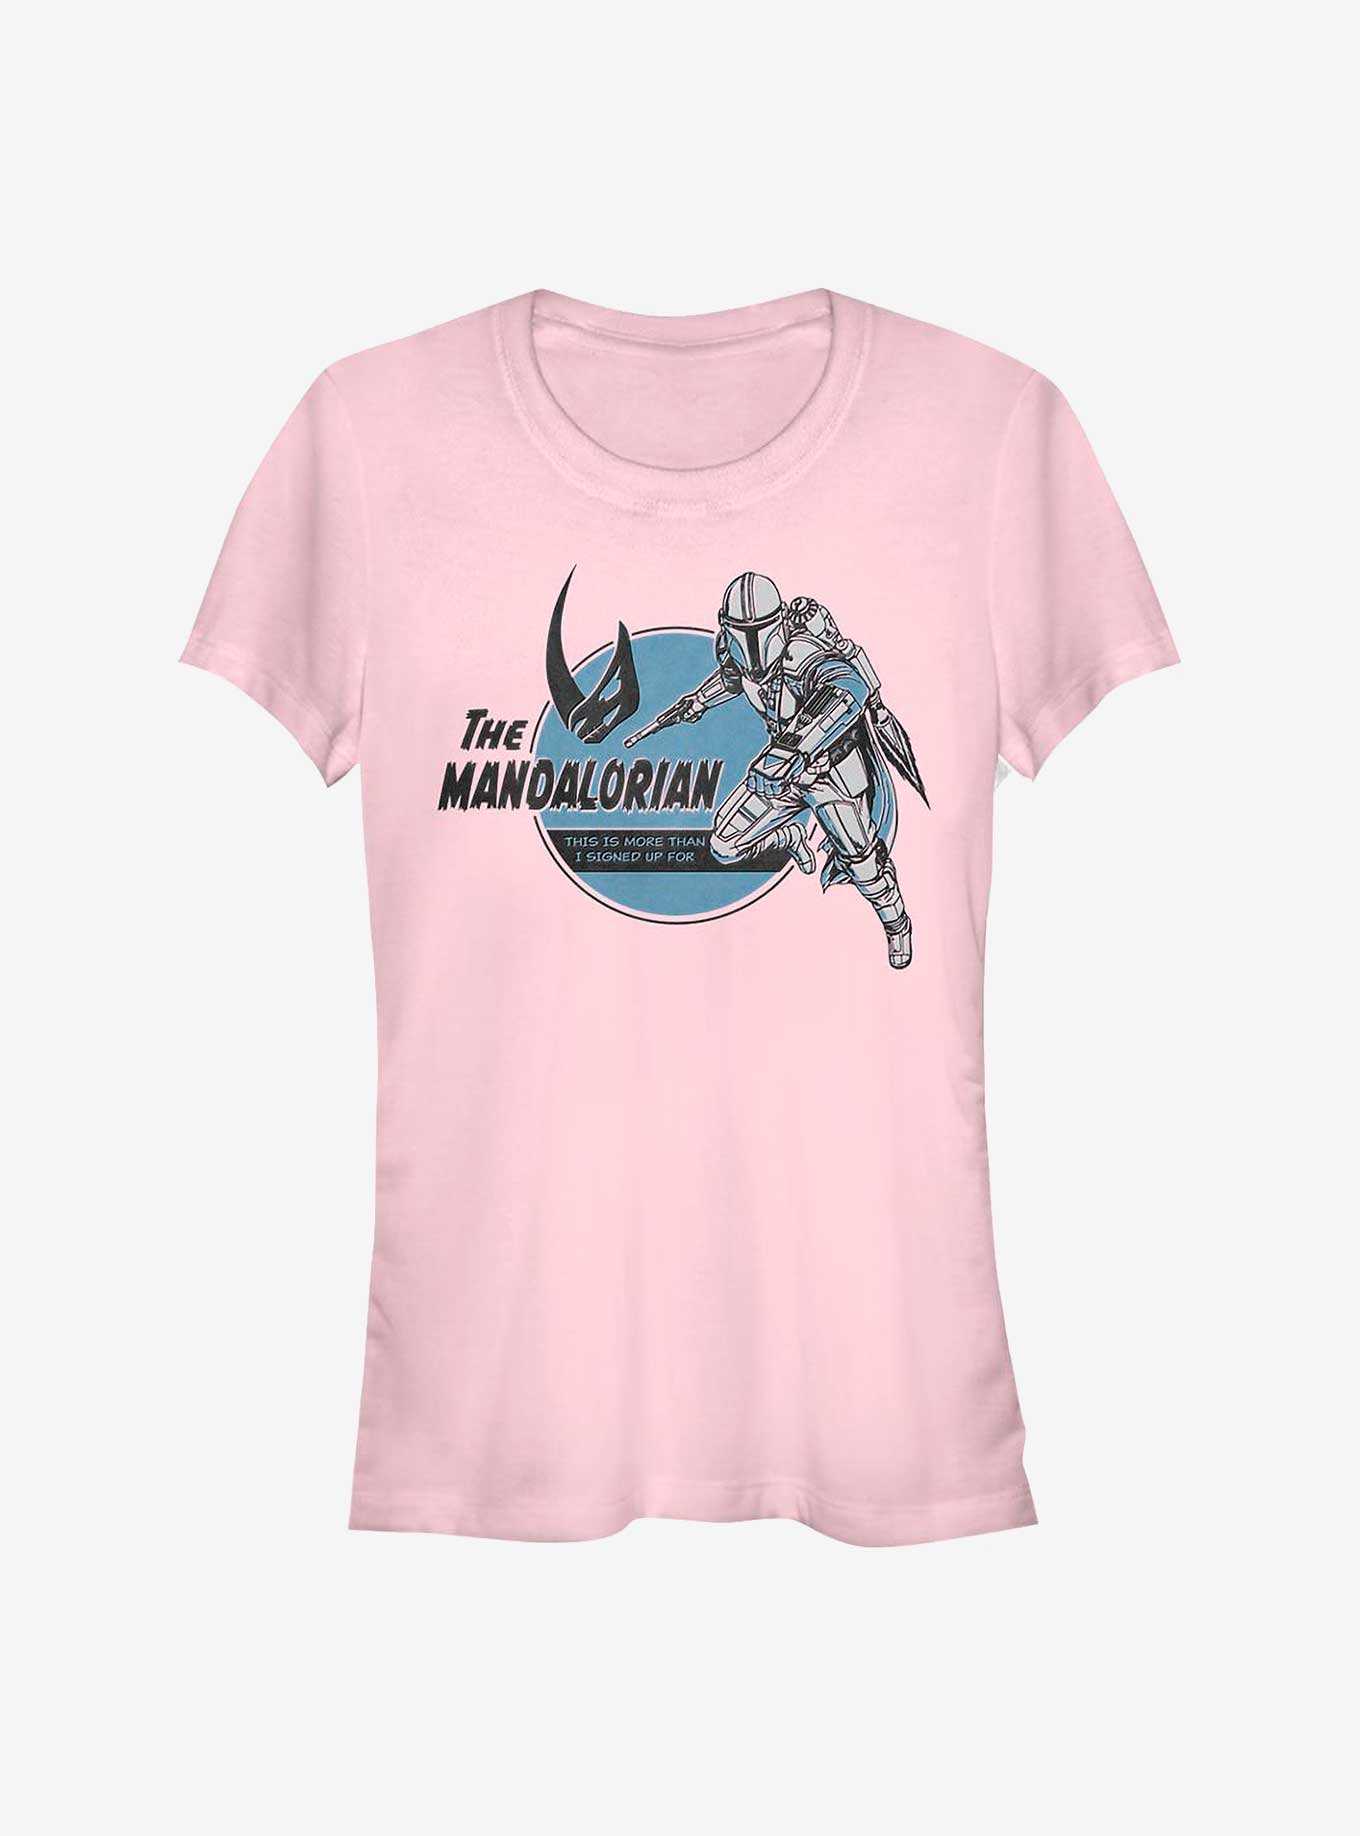 Star Wars The Mandalorian Jetpack More Than I Signed Up For Girls T-Shirt, , hi-res